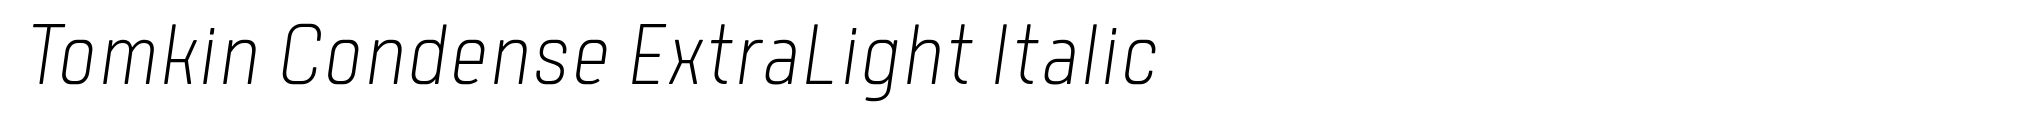 Tomkin Condense ExtraLight Italic image